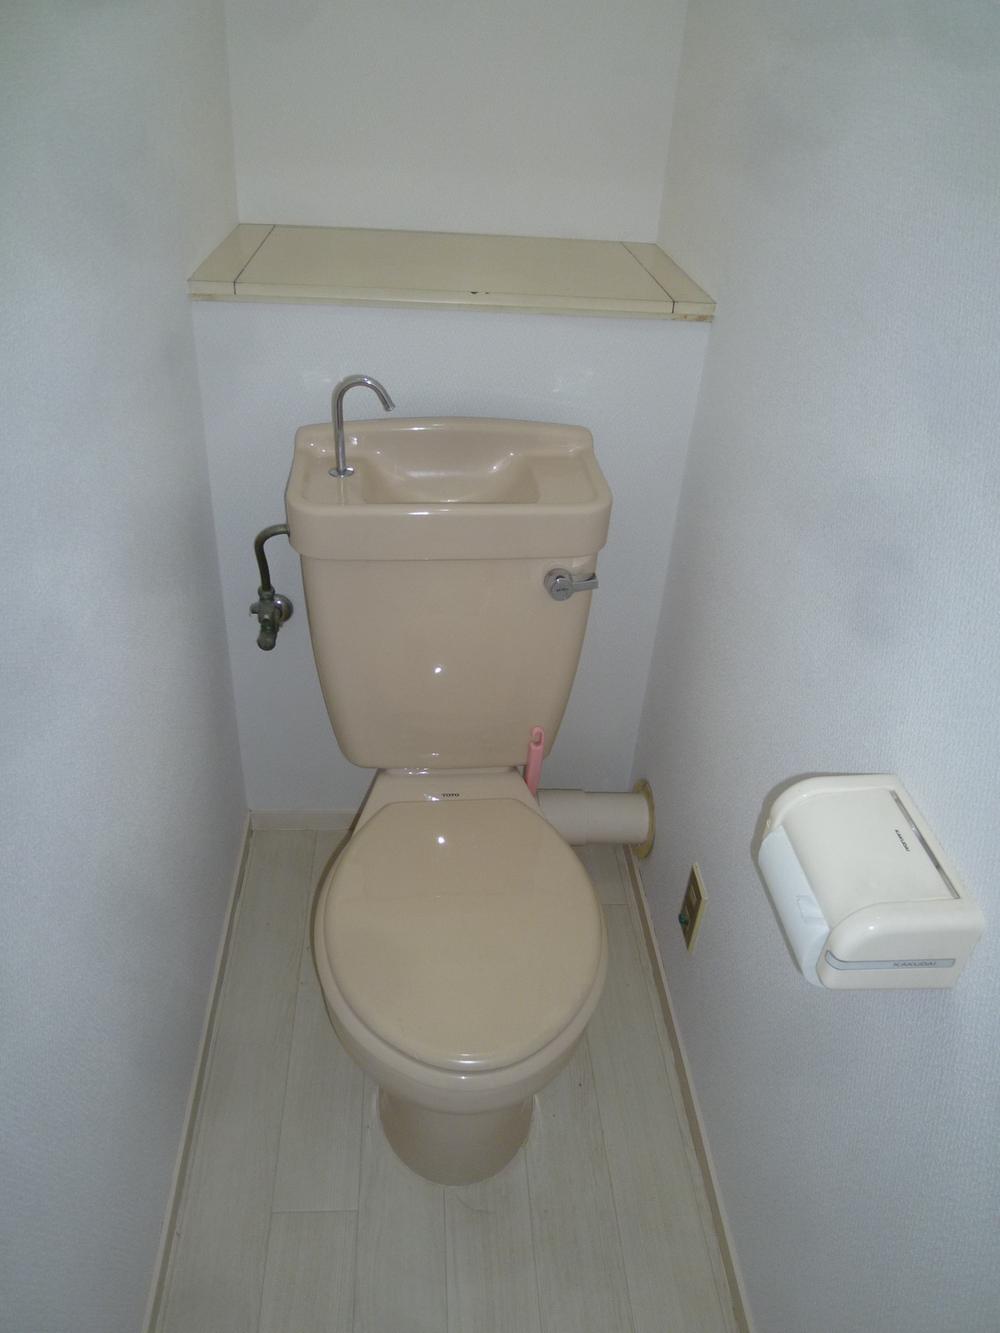 Toilet. 2013 October 13, shooting